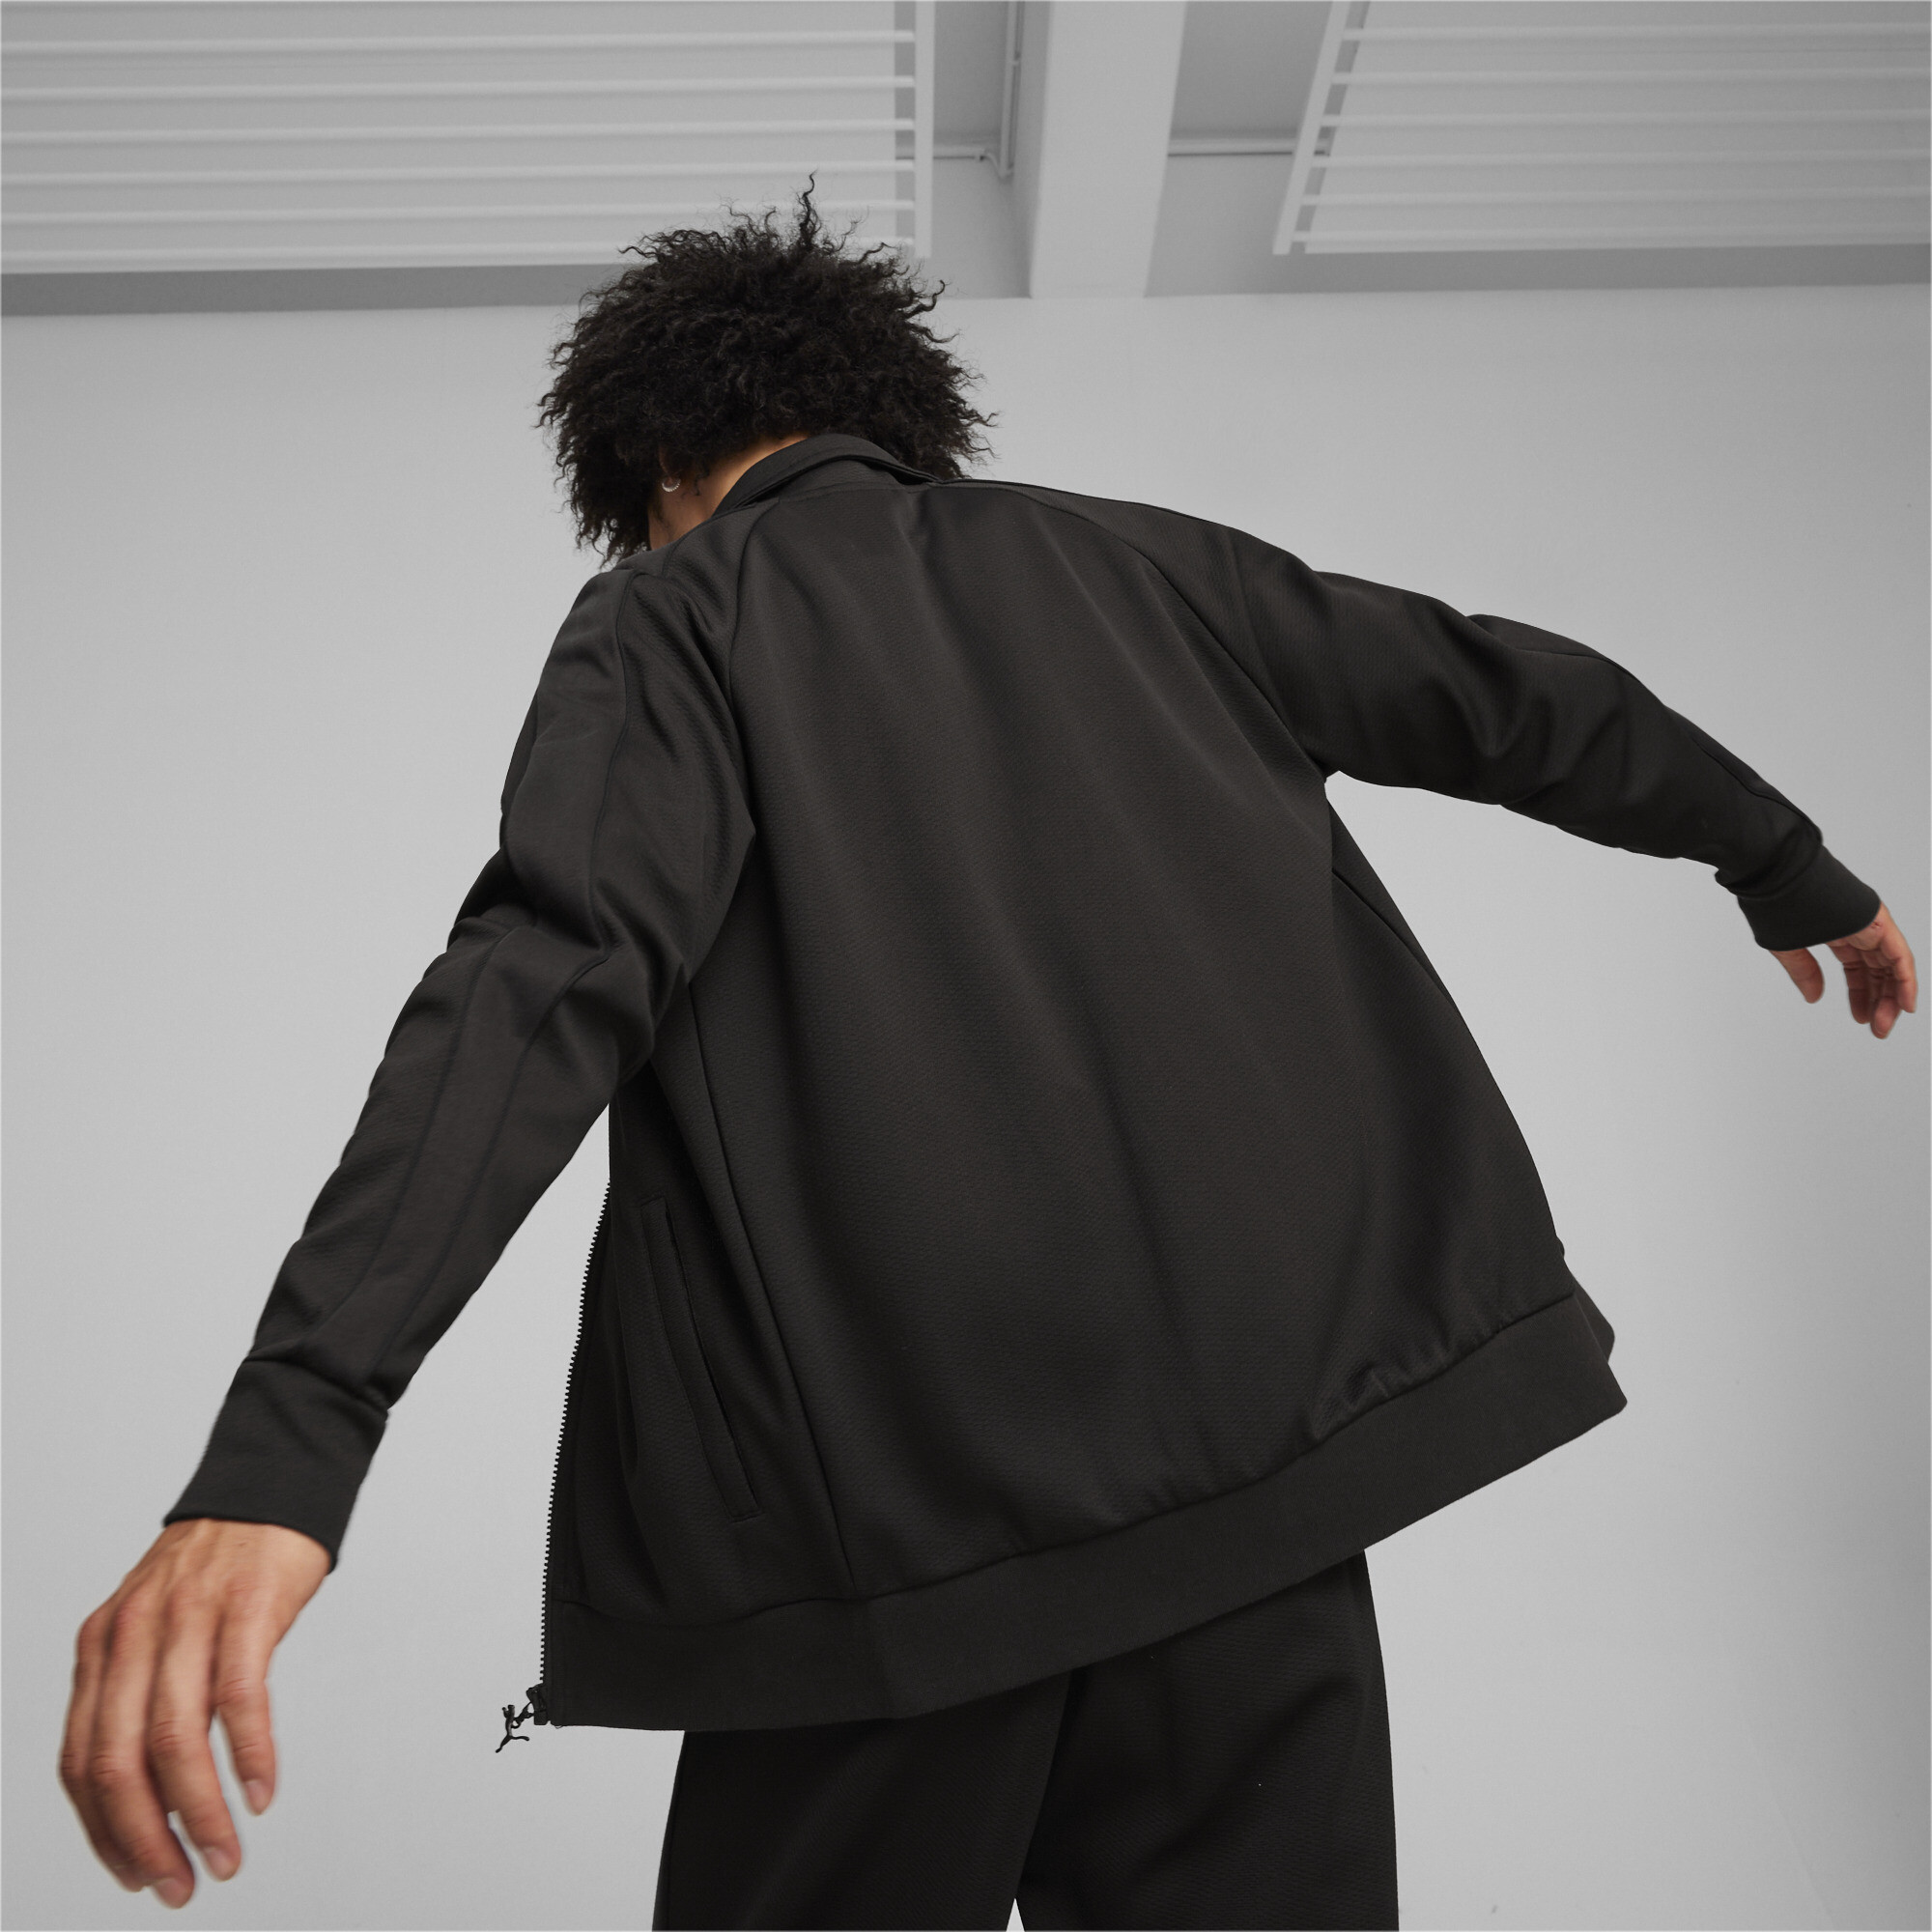 Men's PUMA T7 Track Jacket In Black, Size XS